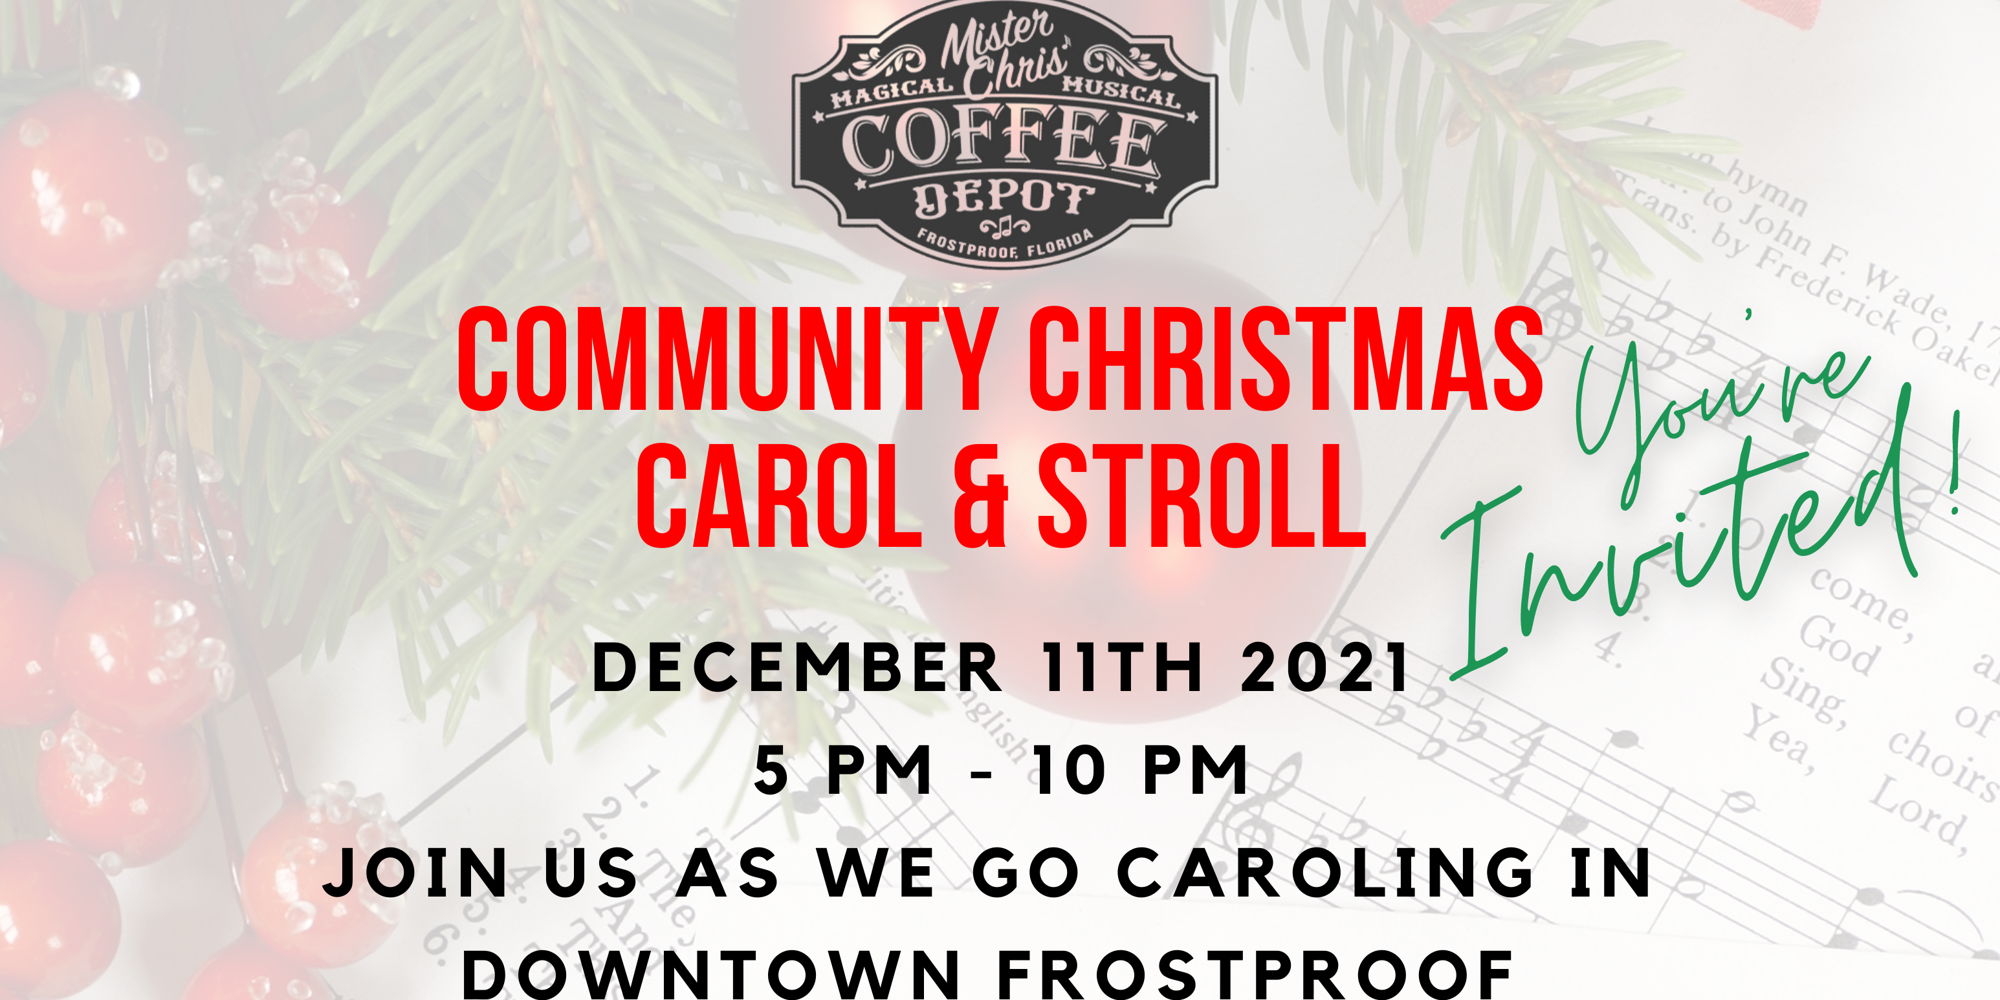 Frostproof Community Christmas Carol & Stroll promotional image